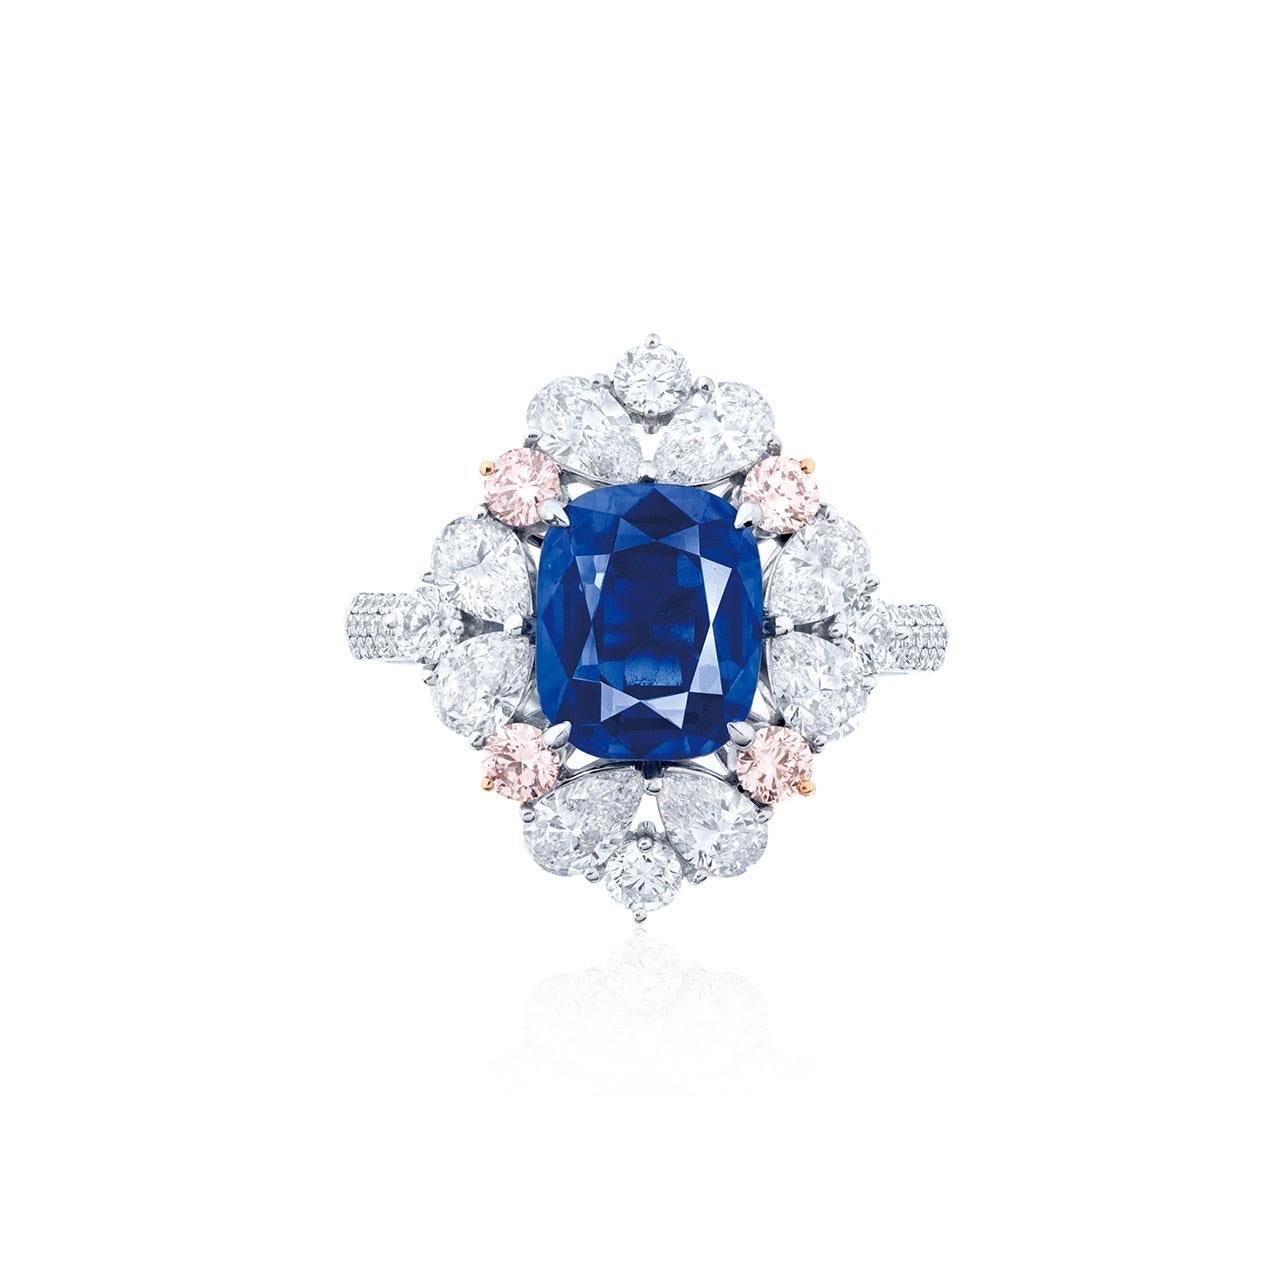 Kashmir Sapphire Main stone: 4.90+ carat Royal Blue, Cushion

Setting: 4 Argyle pink diamonds totaling approximately 0.31 carats, 8 fancy-cut white diamonds totaling approximately 1.52 carats, 58 round white diamonds totaling approximately 0.48